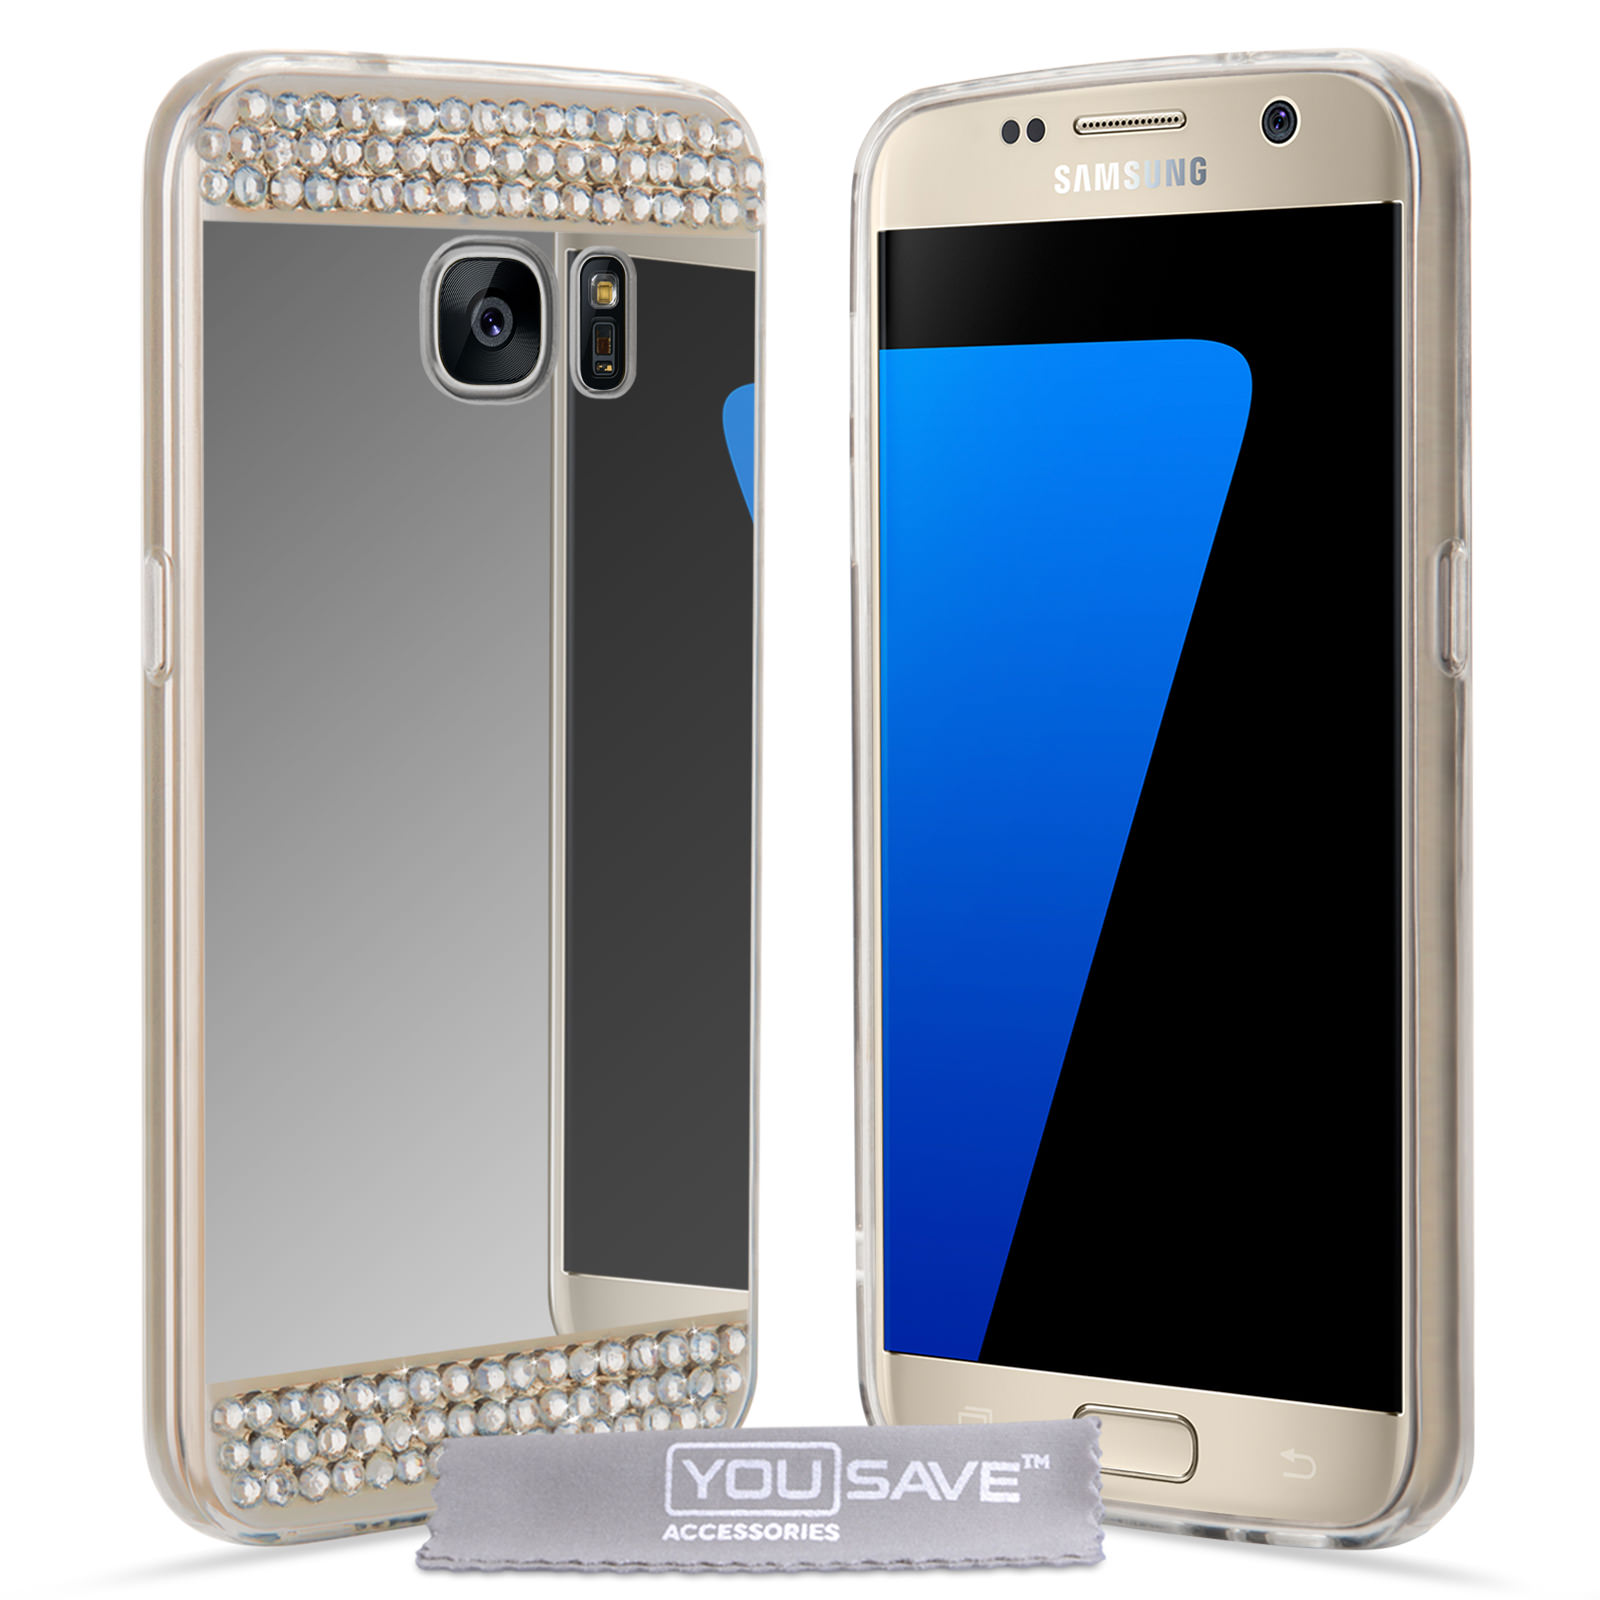 Yousave Accessories Samsung Galaxy S7 Mirror Diamond Case - Silver